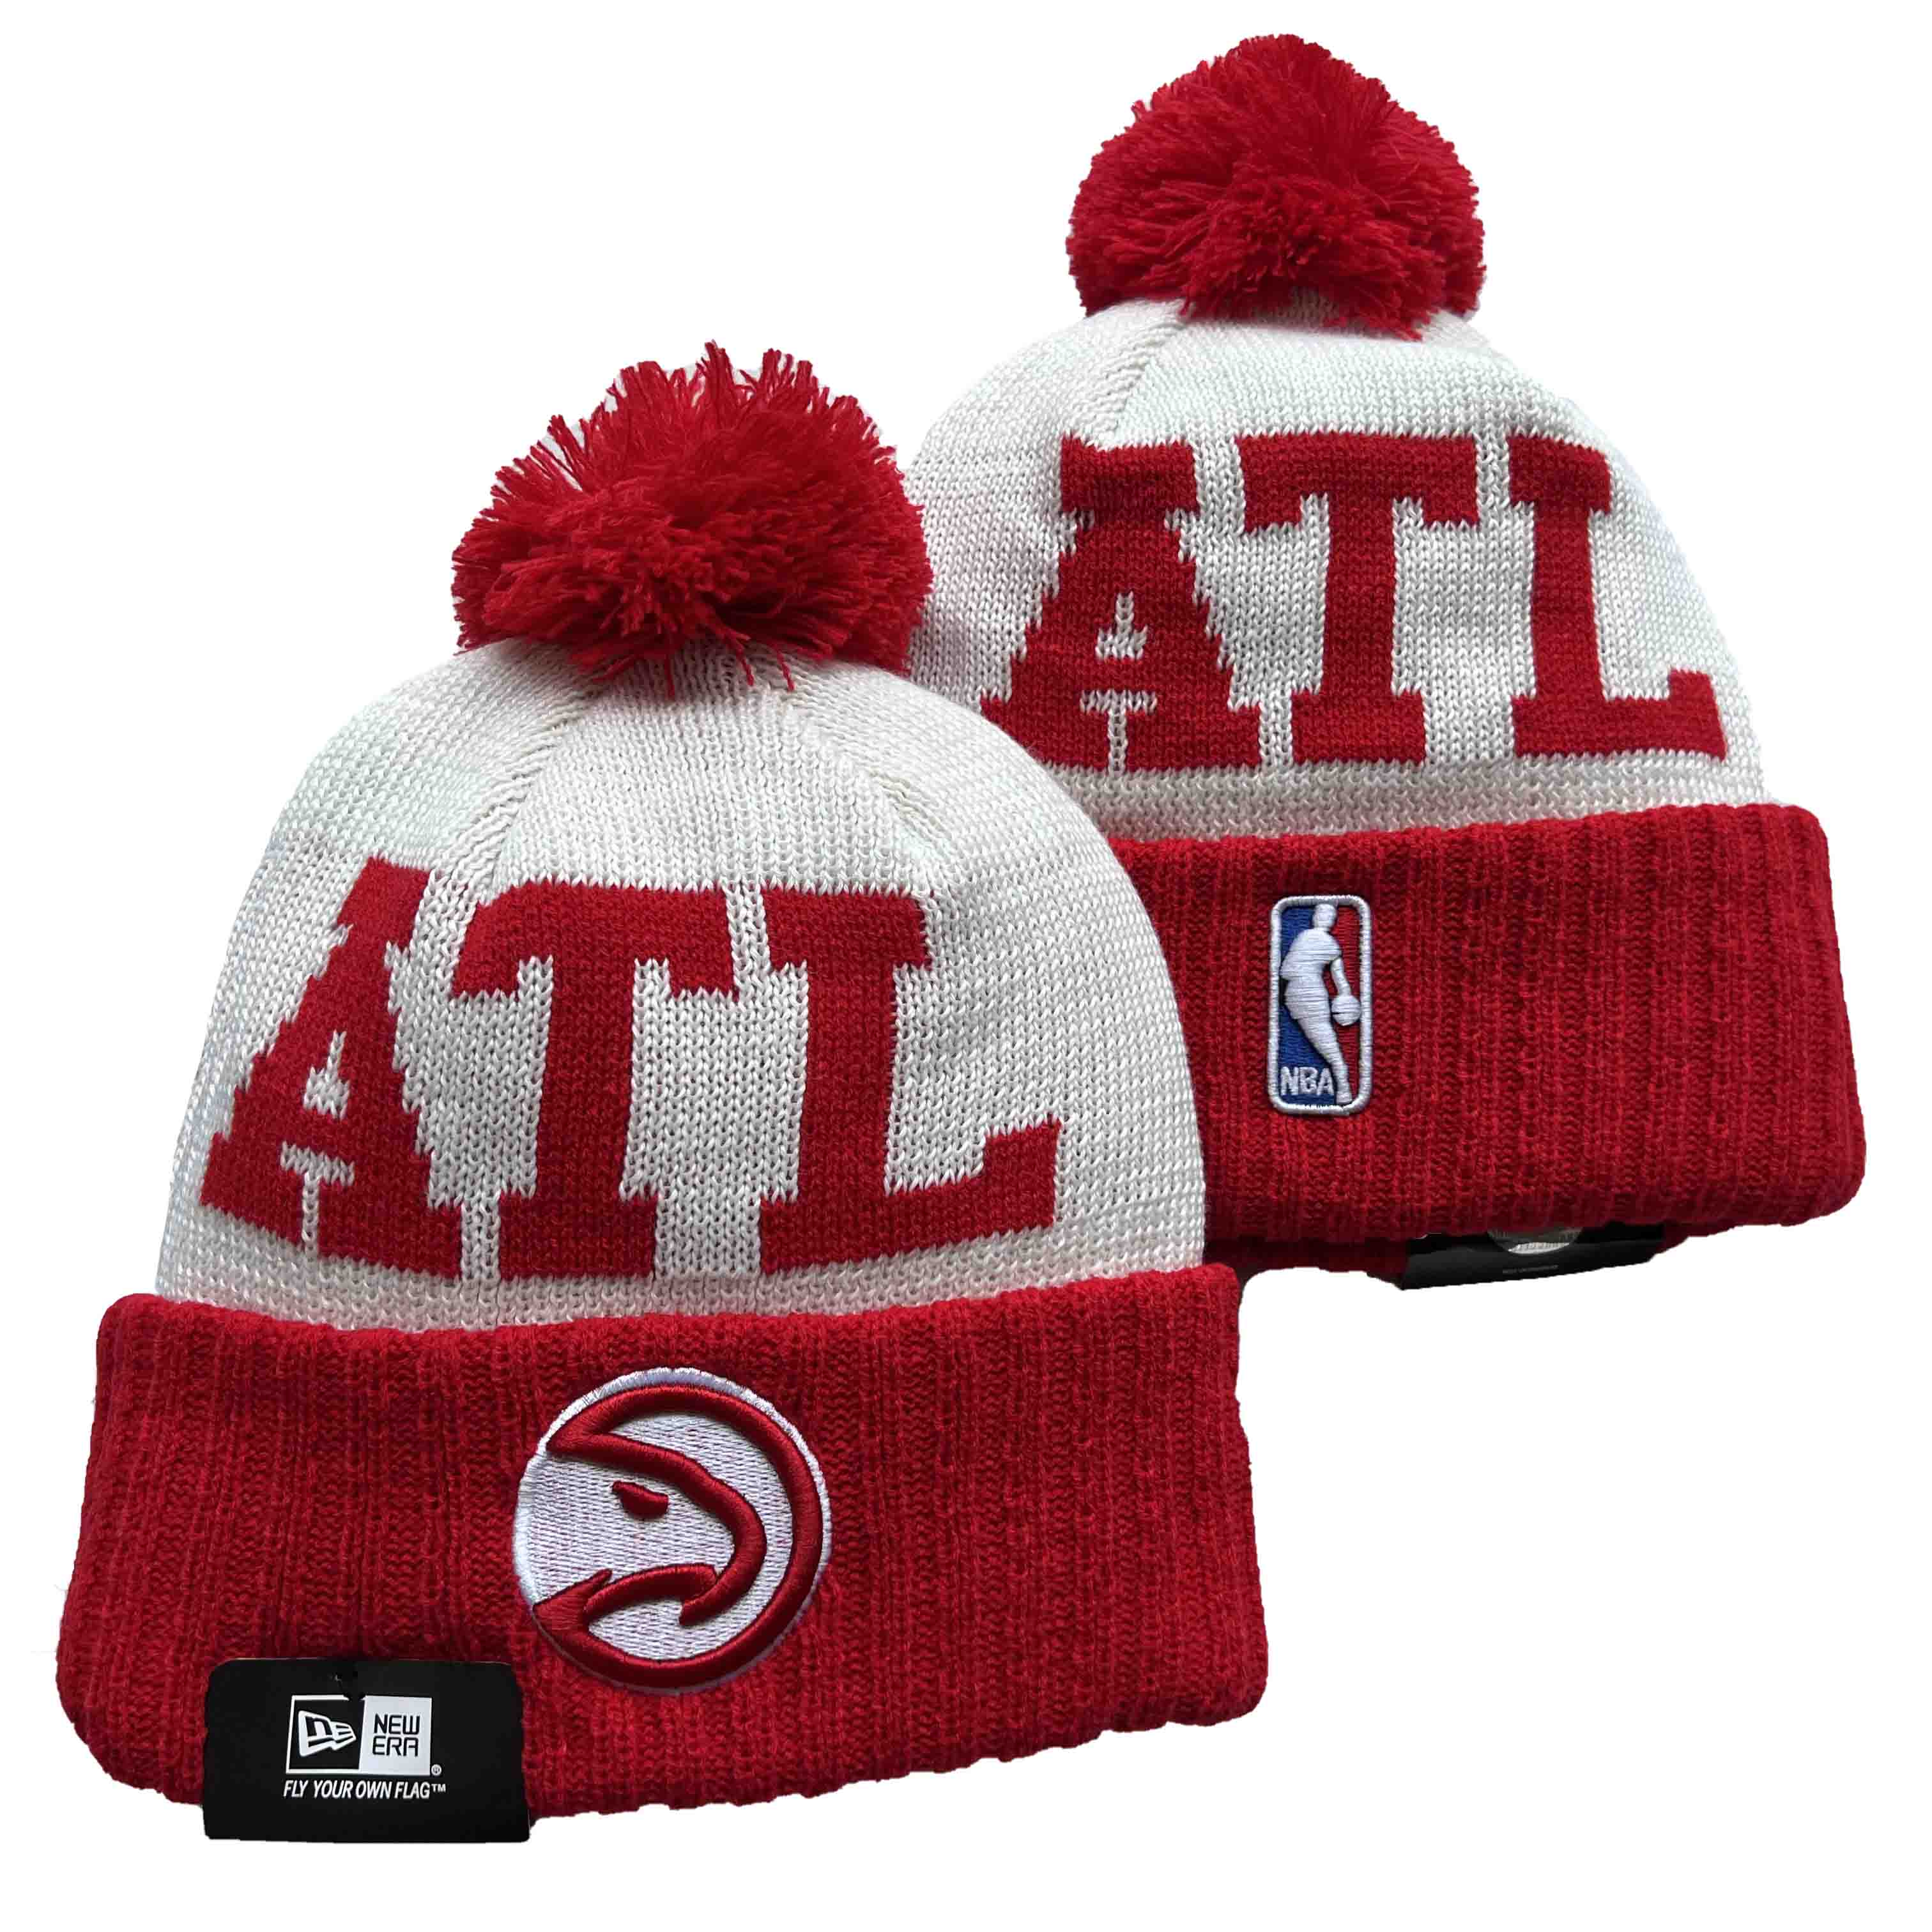 NBA Atlanta Hawks Beanies Knit Hats-YD510